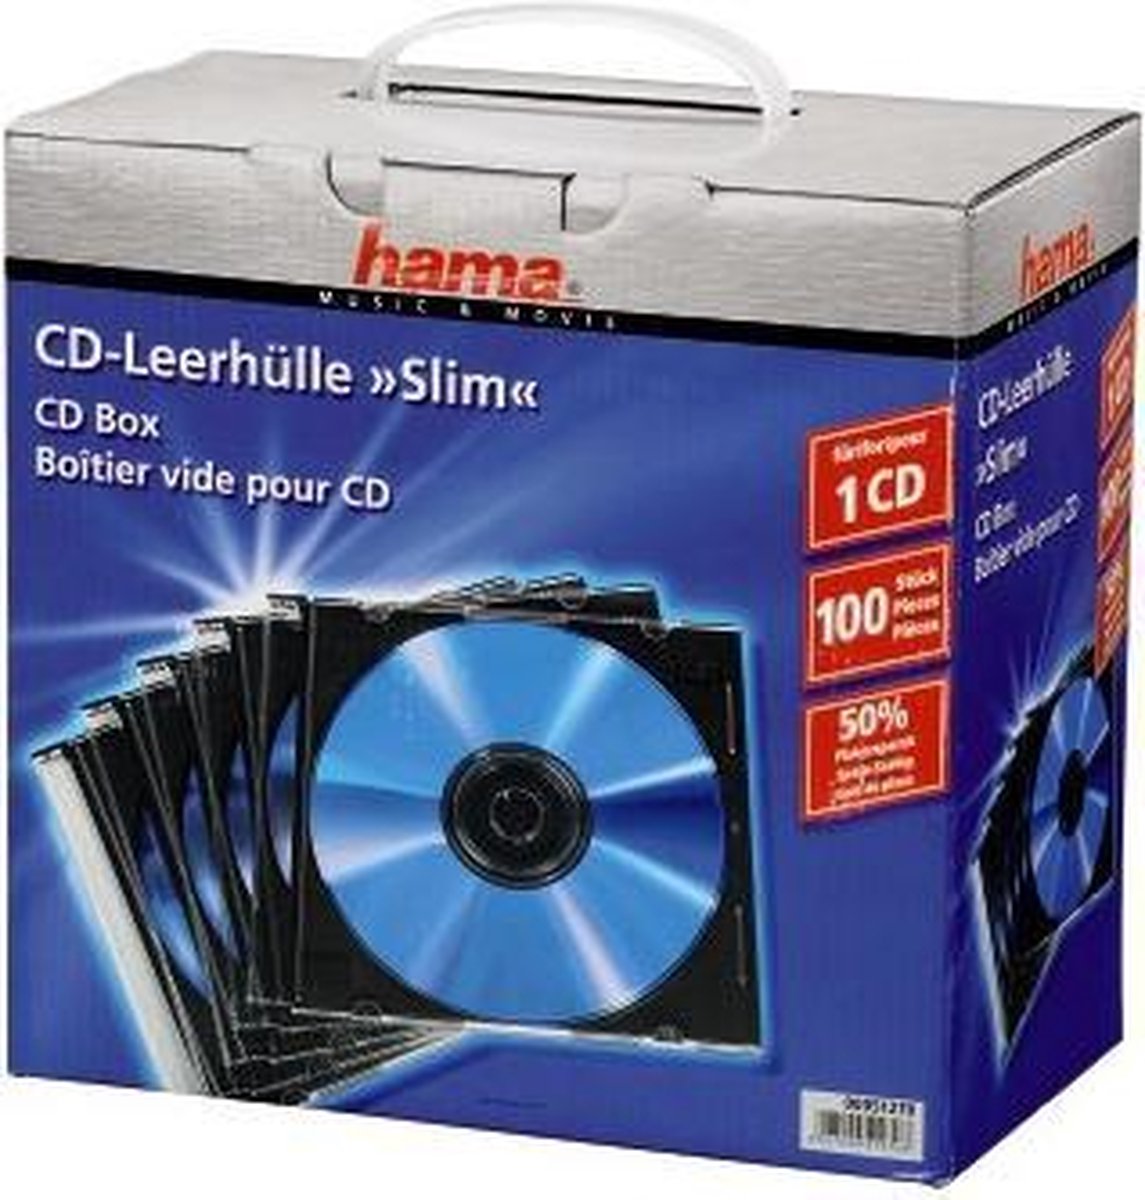 HAMA 1651165 à 15,90 € - hama Boîtier vide CD 'Slim', Slim case